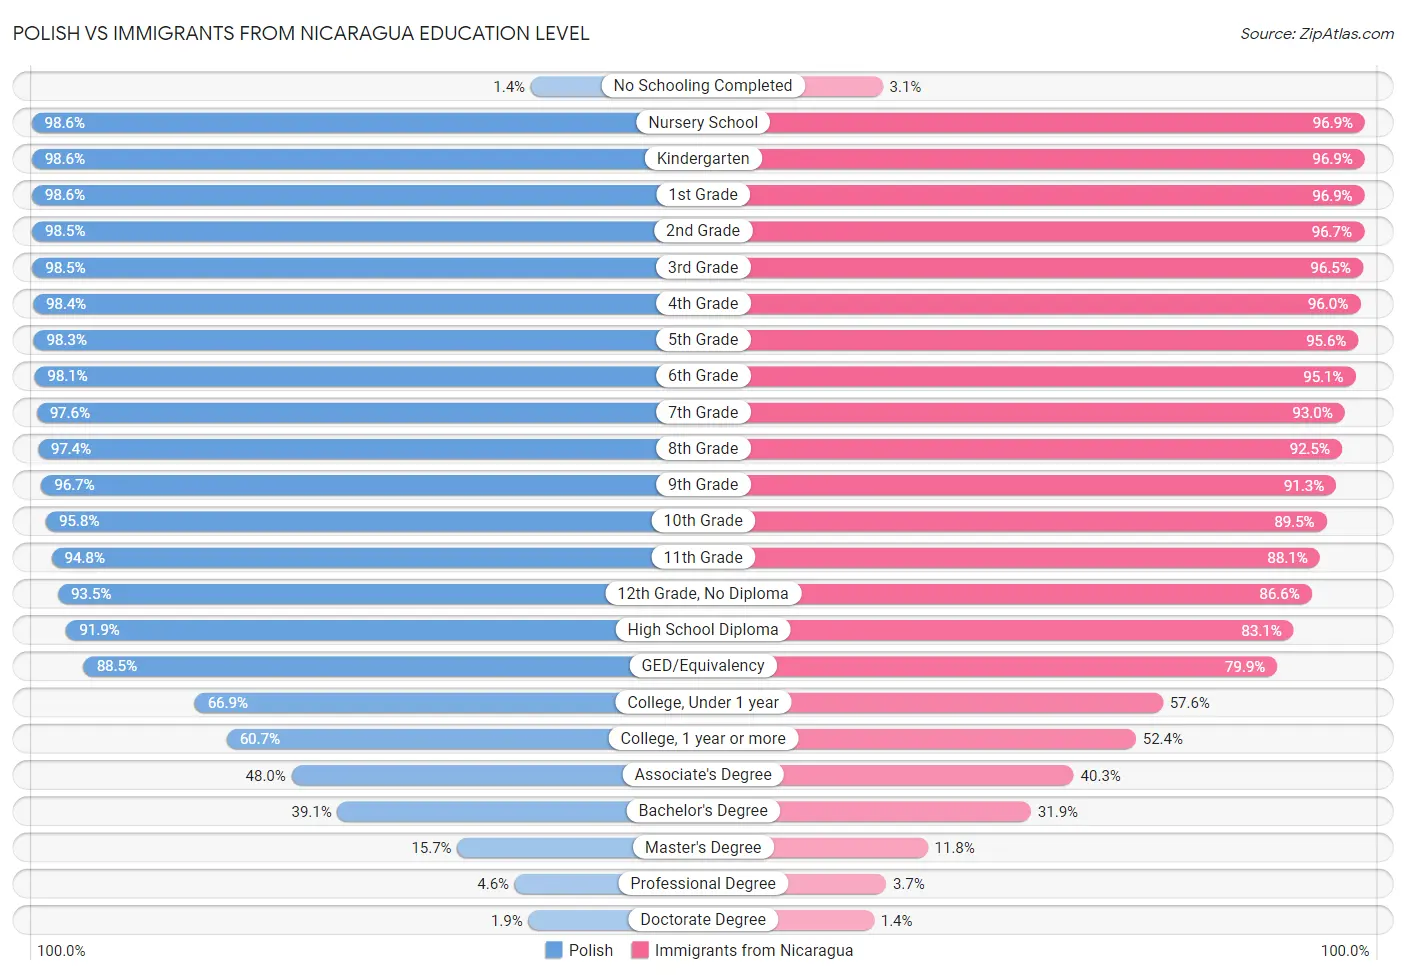 Polish vs Immigrants from Nicaragua Education Level